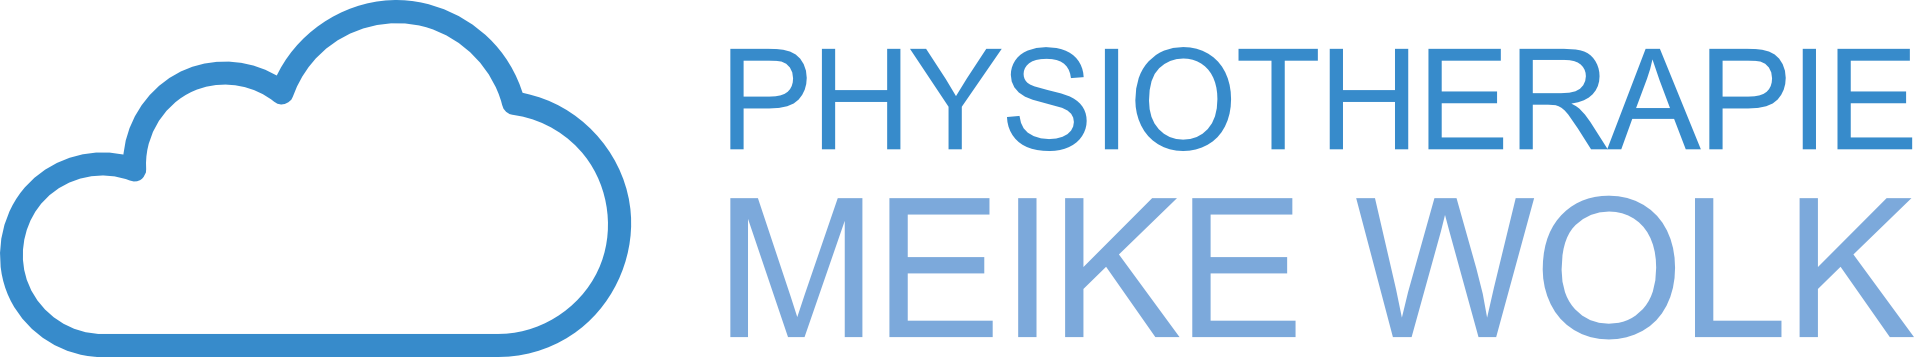 Physiotherapie Meike Wolk